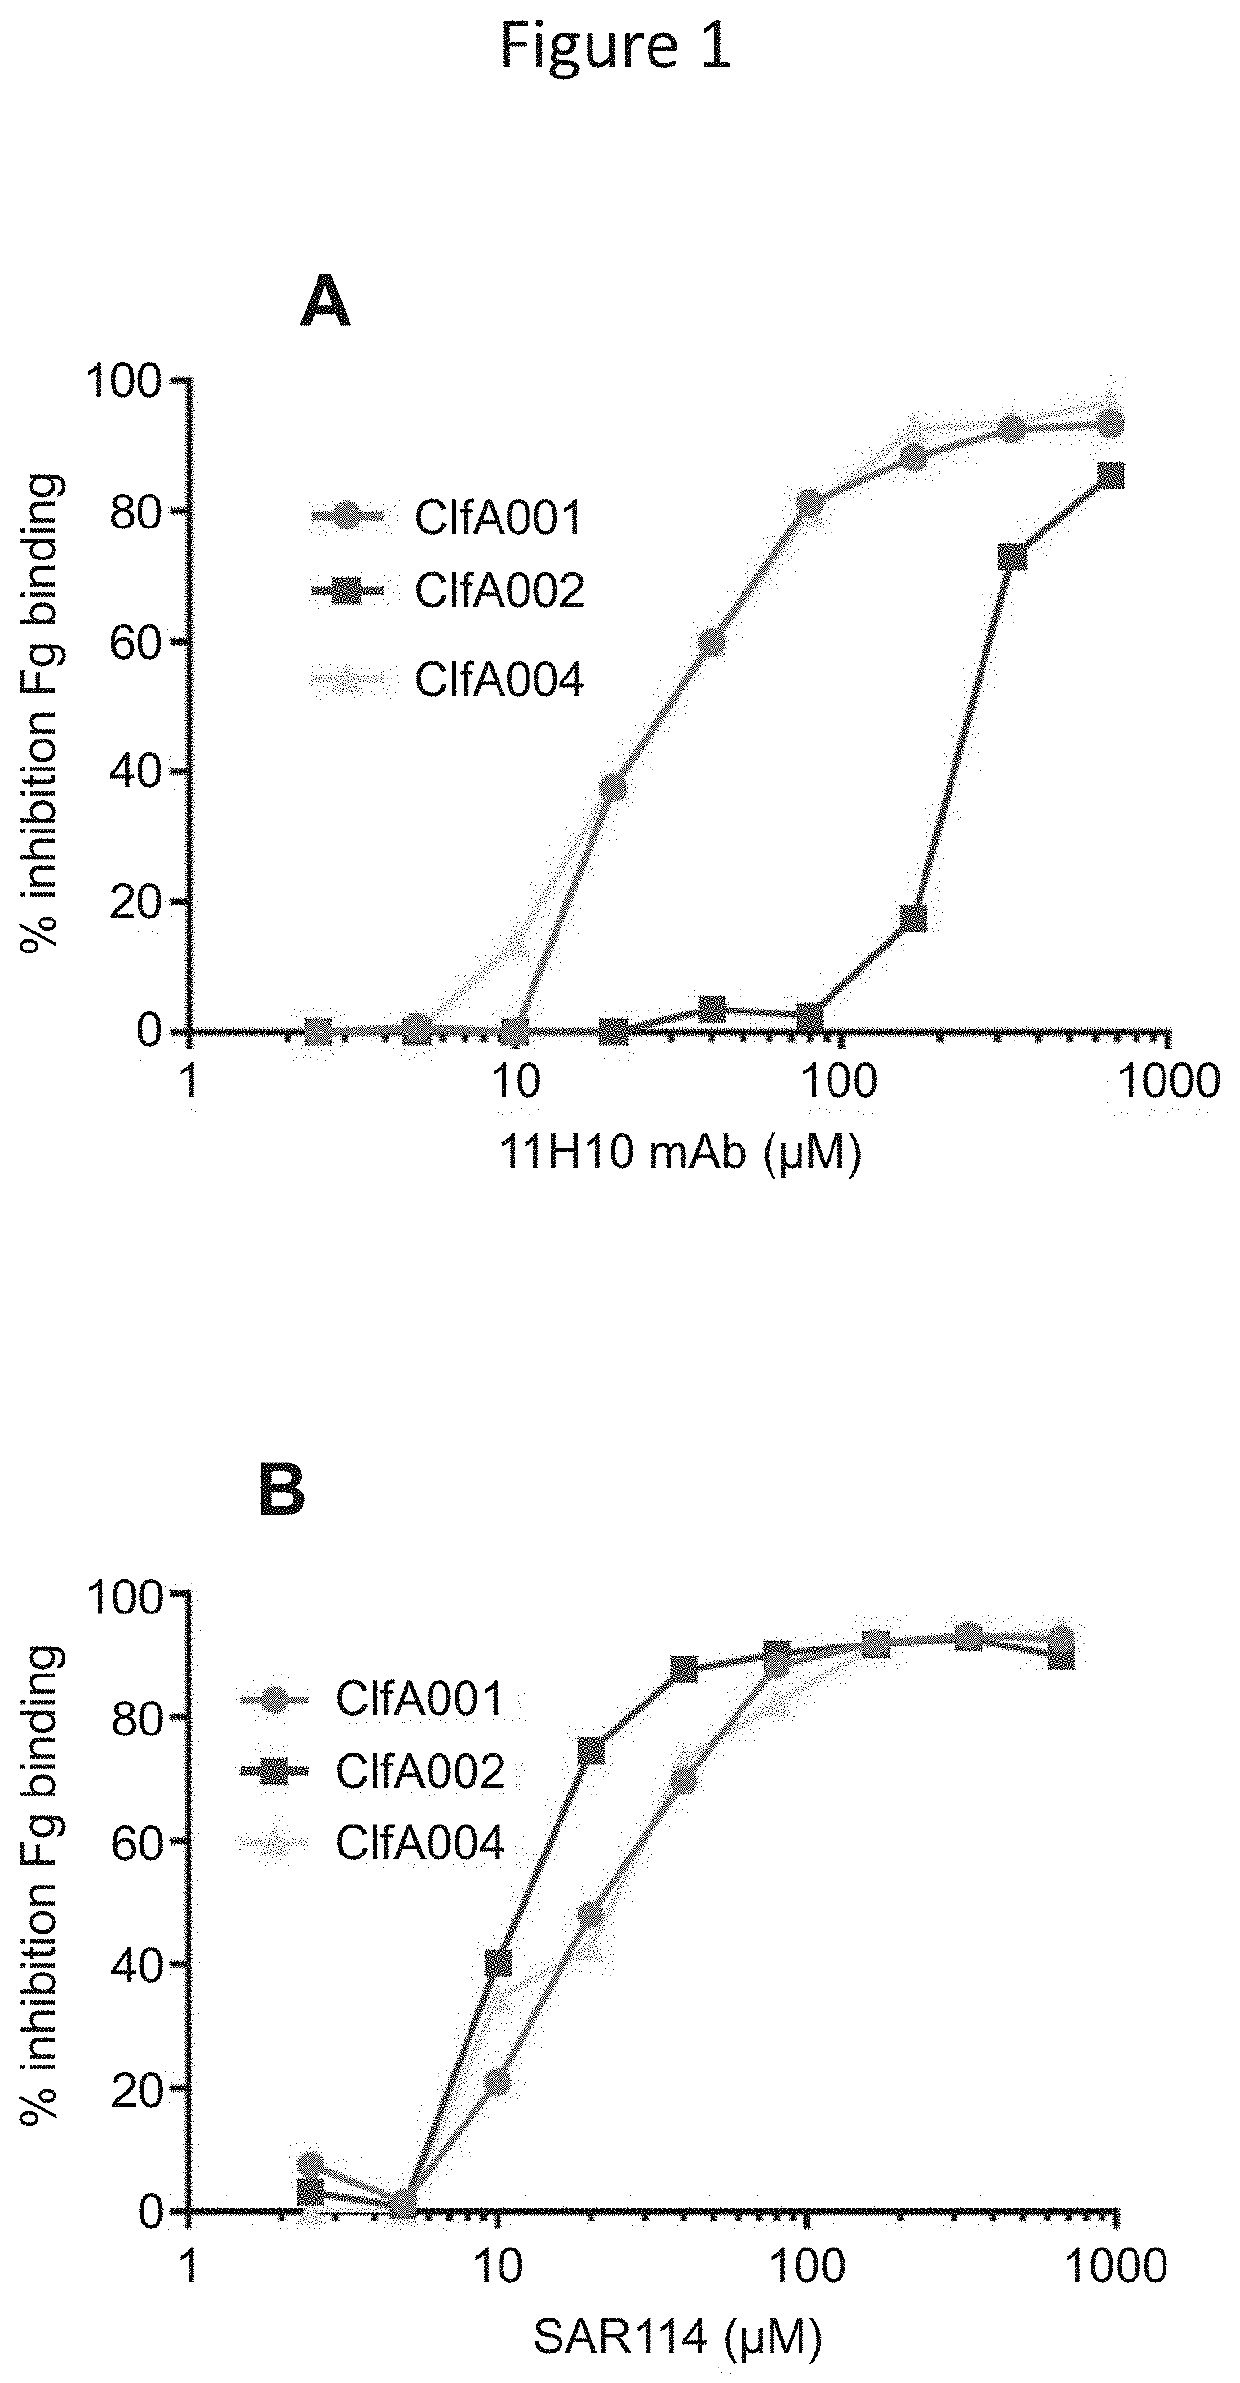 Antibody directed against <i>S. aureus </i>clumping factor a (ClfA)